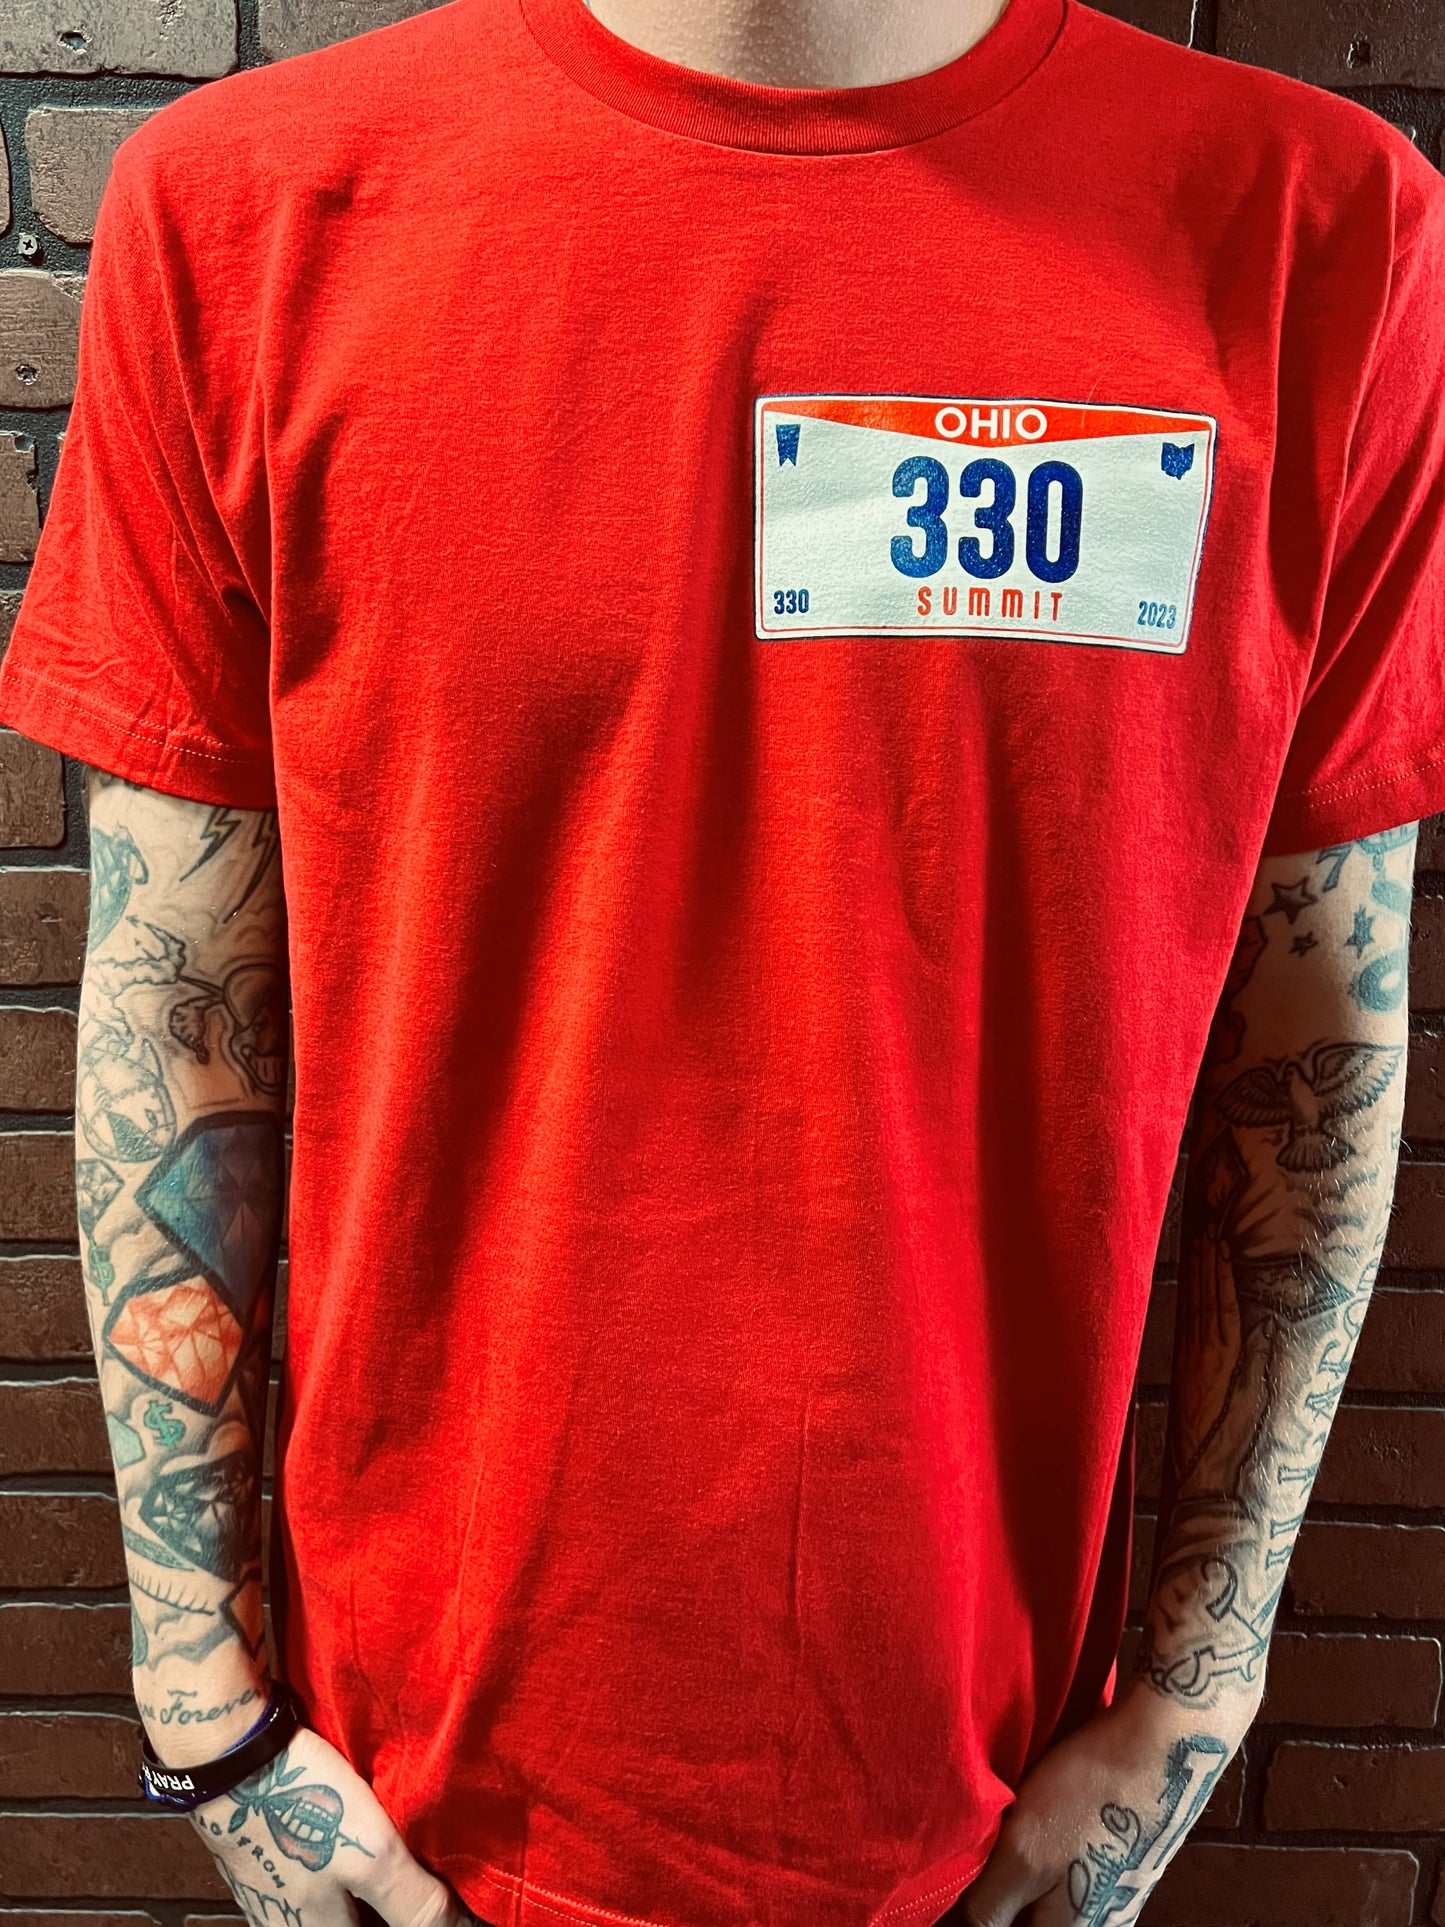 330 LIMITED Collab T-shirt - Designed by Caleb Aronhalt